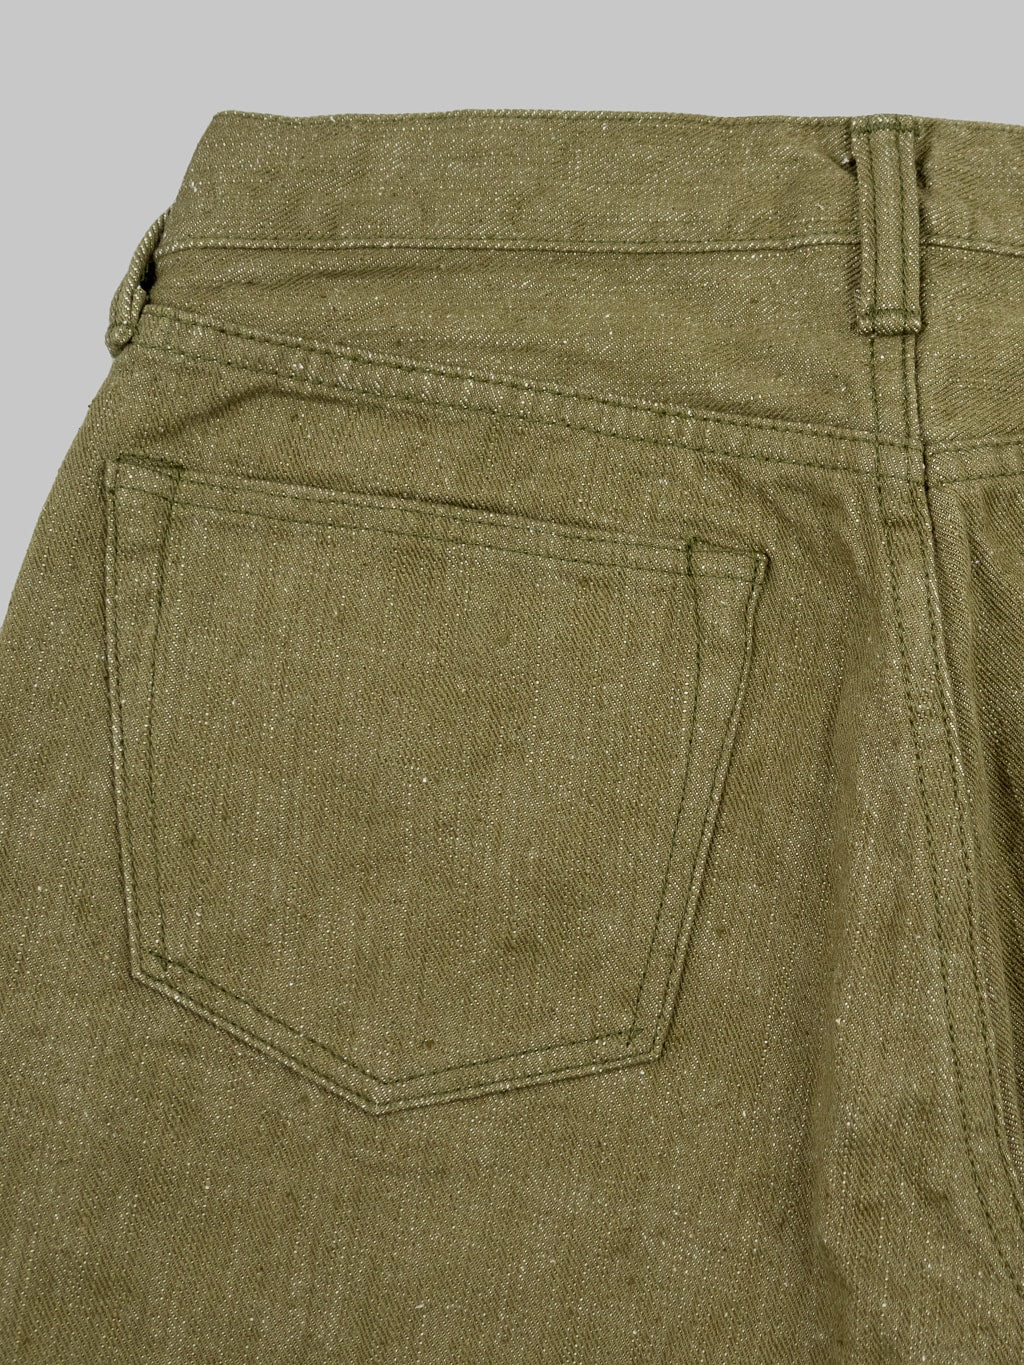 Samurai Jeans S150GNX Uguisu 17oz Regular Straight Jeans back pocket